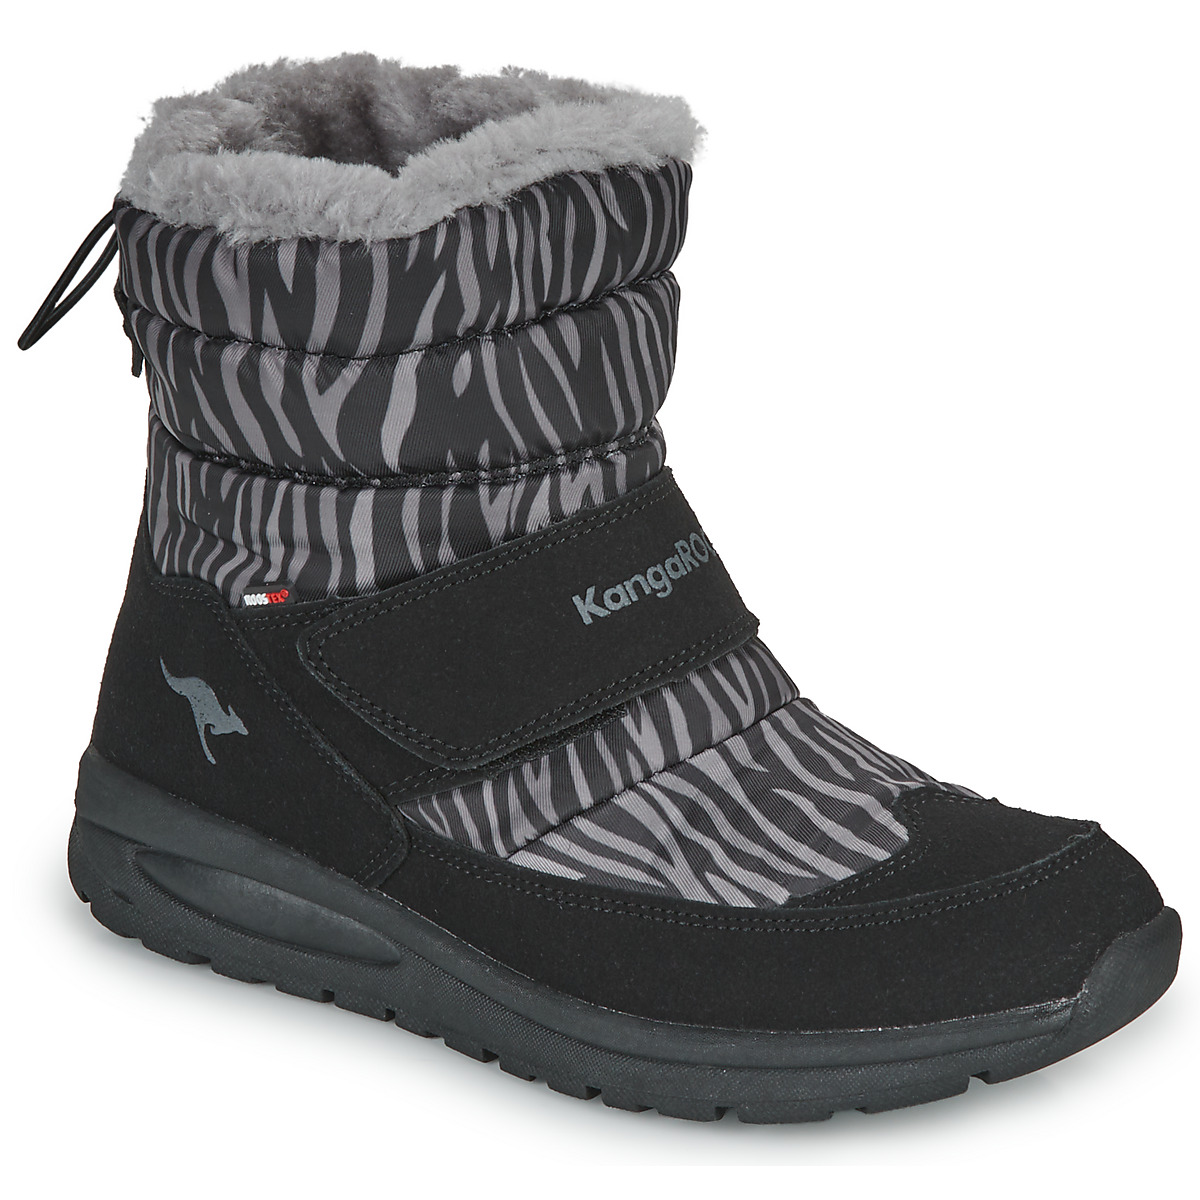 Čevlji  Ženske Škornji za sneg Kangaroos K-PE Marty RTX Črna